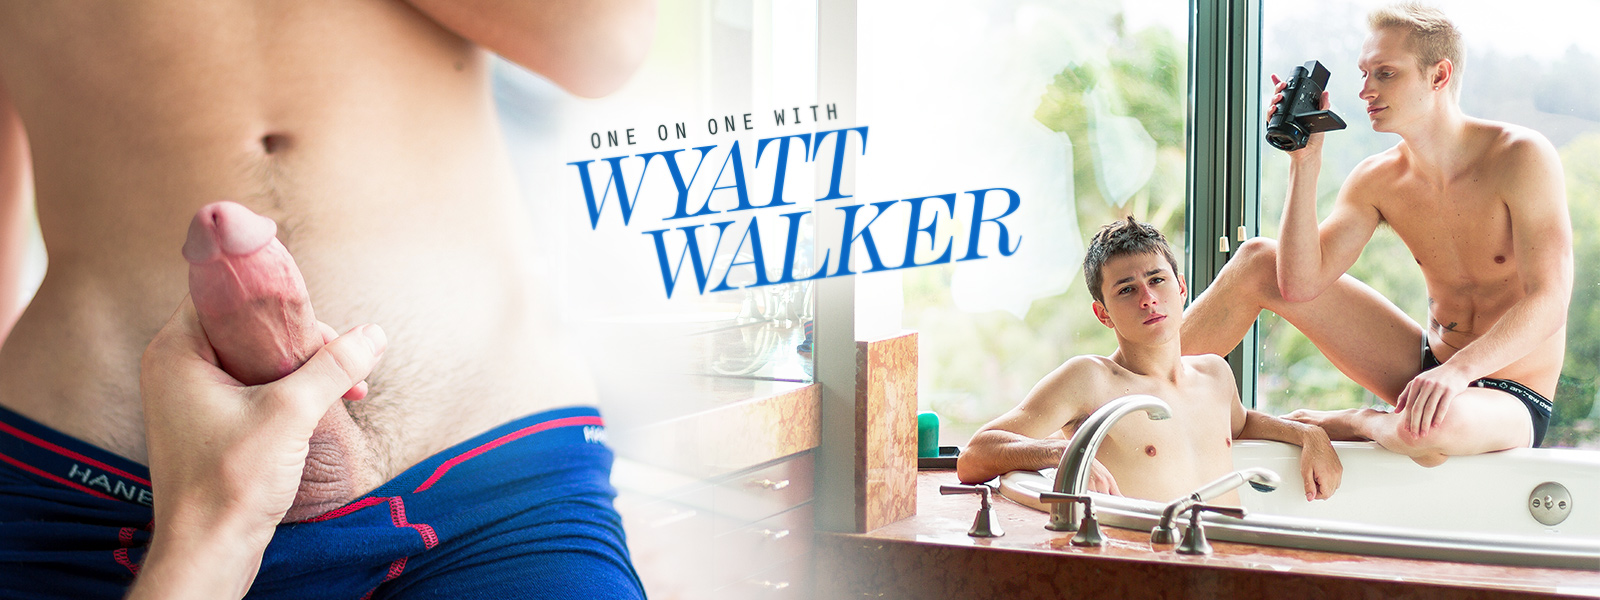 One on One With Wyatt Walker